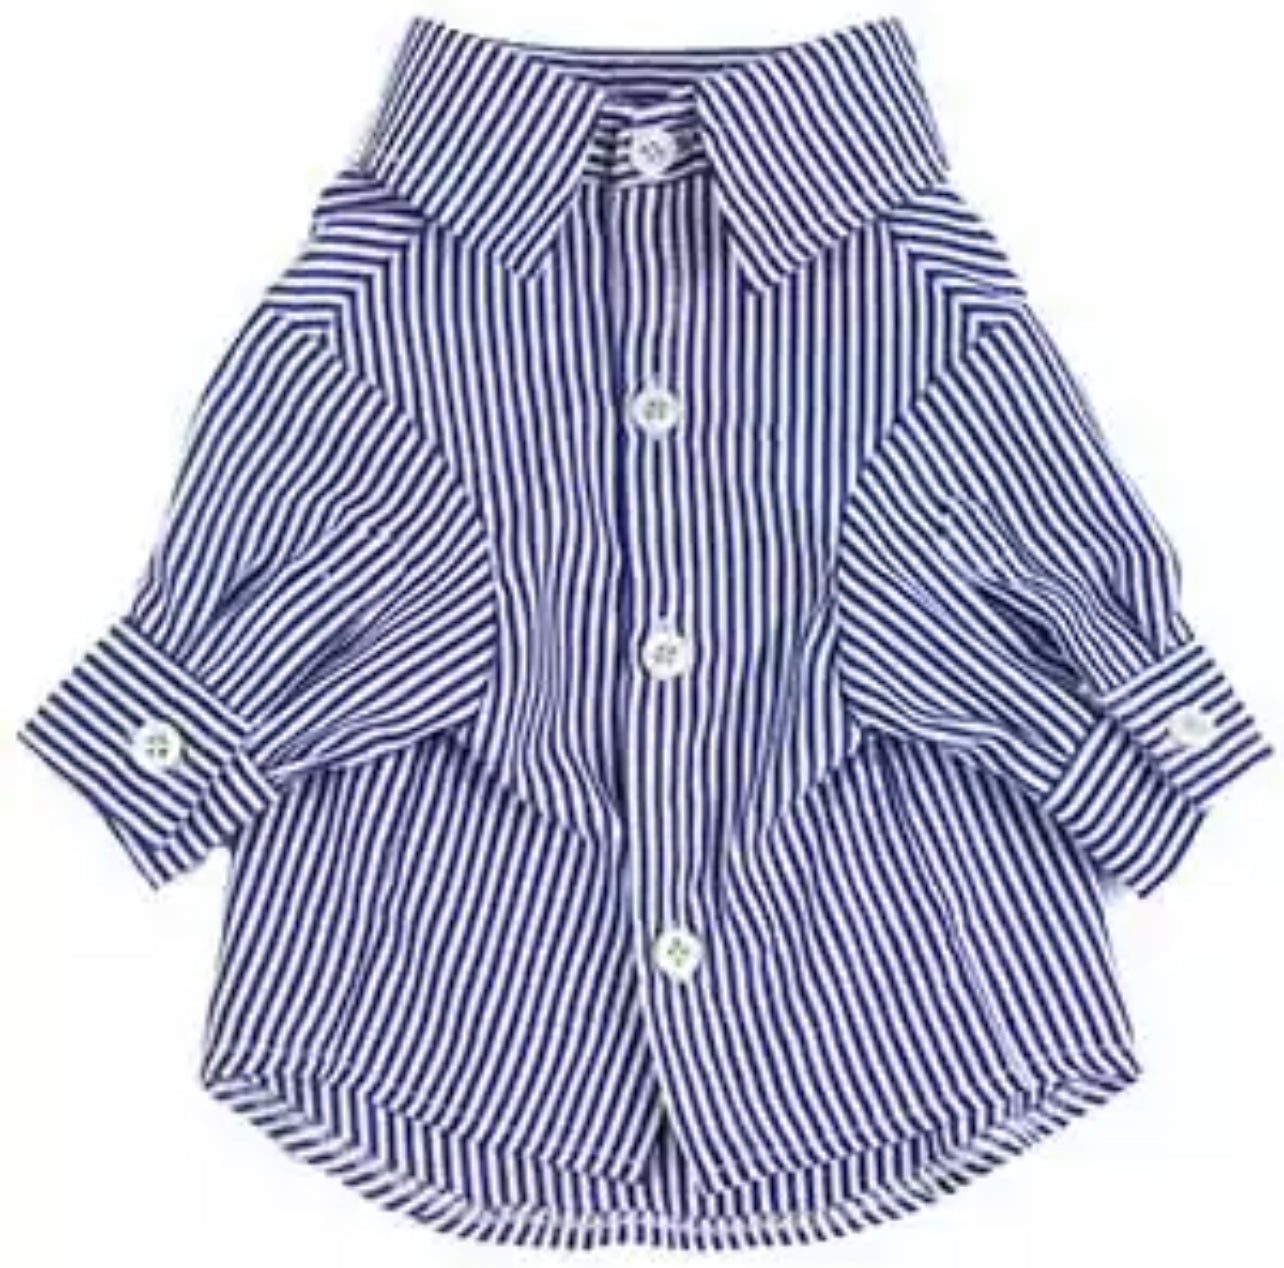 Striped Dog Smart Shirt - White/Navy Blue